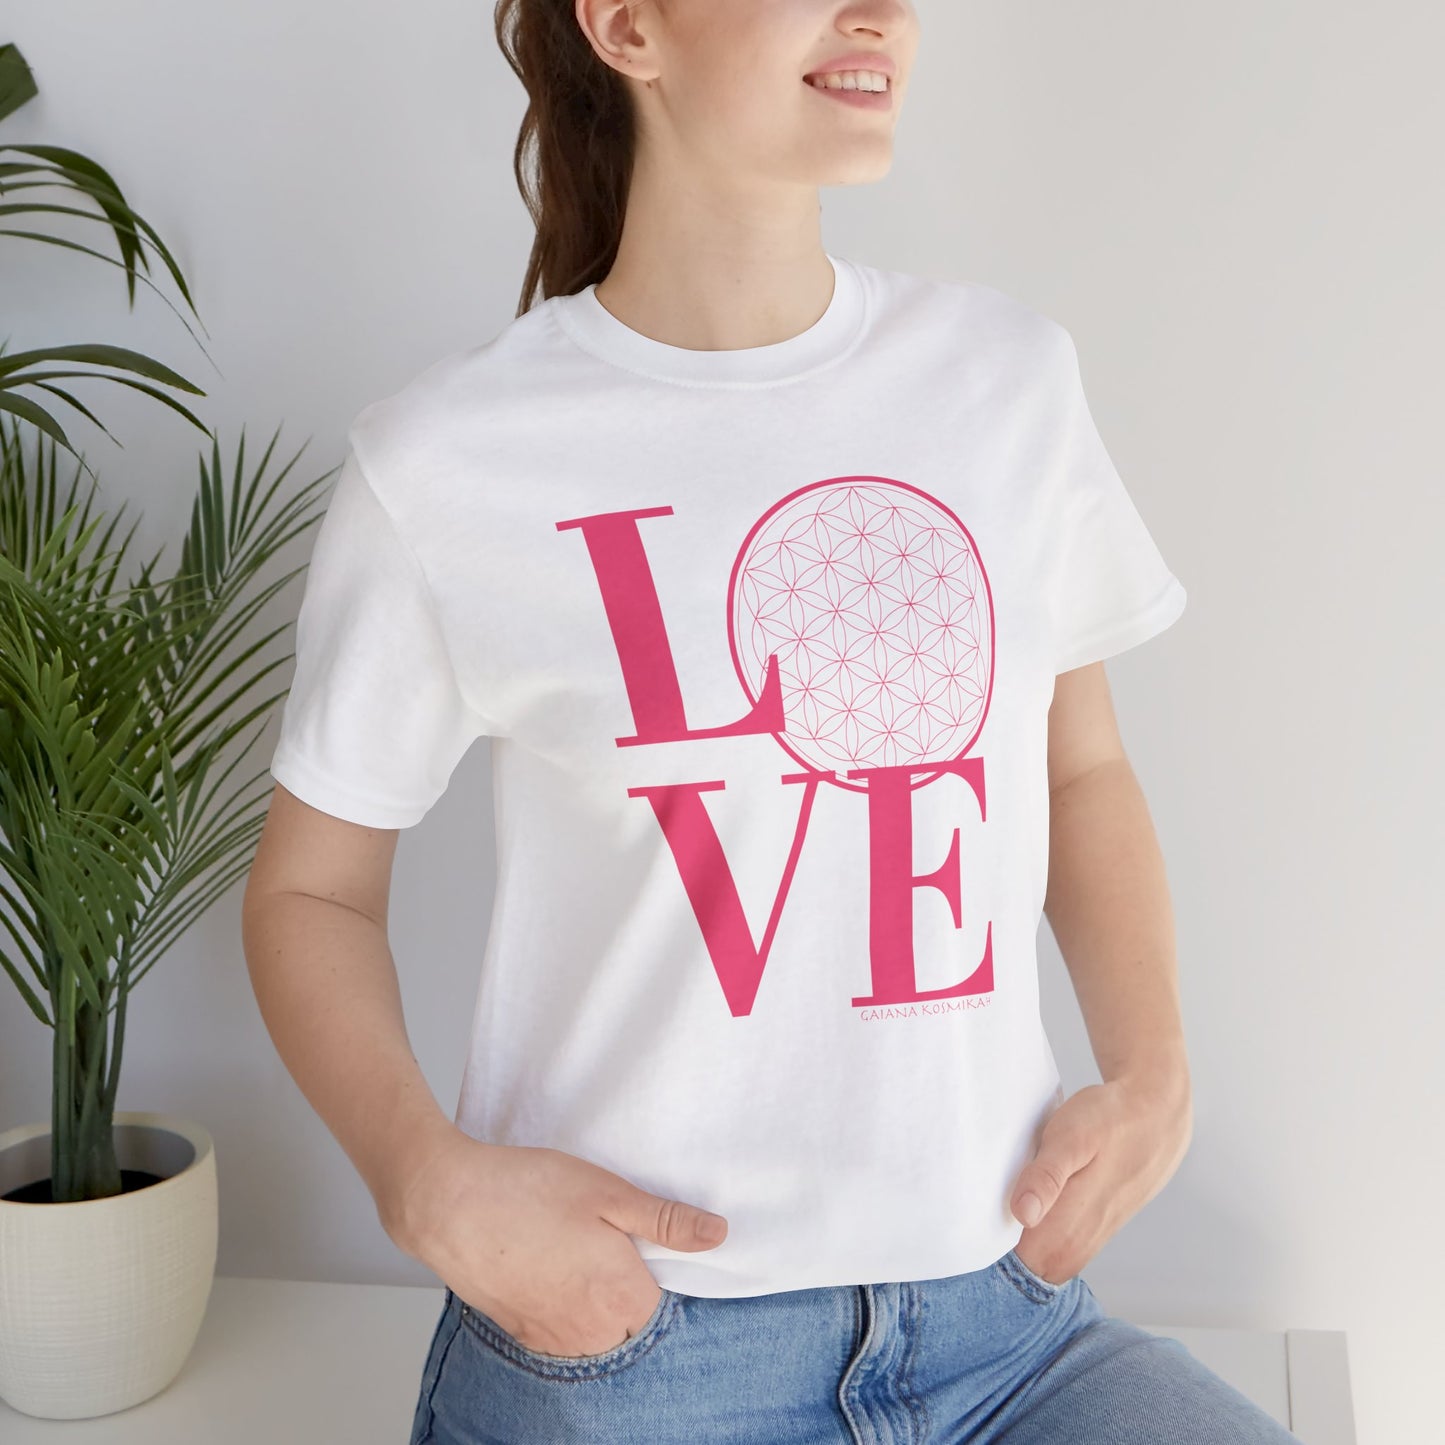 Love Flower of Life Unisex Jersey Short Sleeve Tee | Love Shirt | Flower Of Life Love T-Shirt